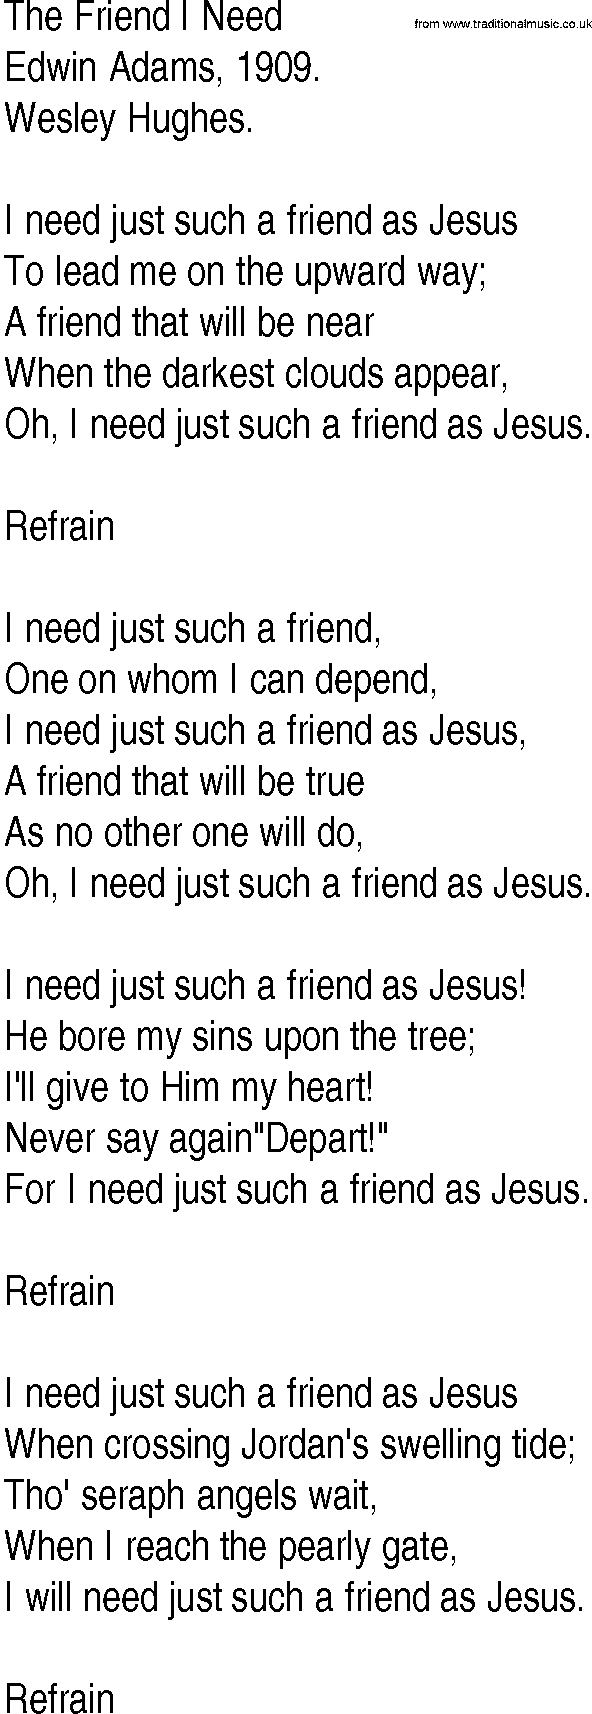 Hymn and Gospel Song: The Friend I Need by Edwin Adams lyrics